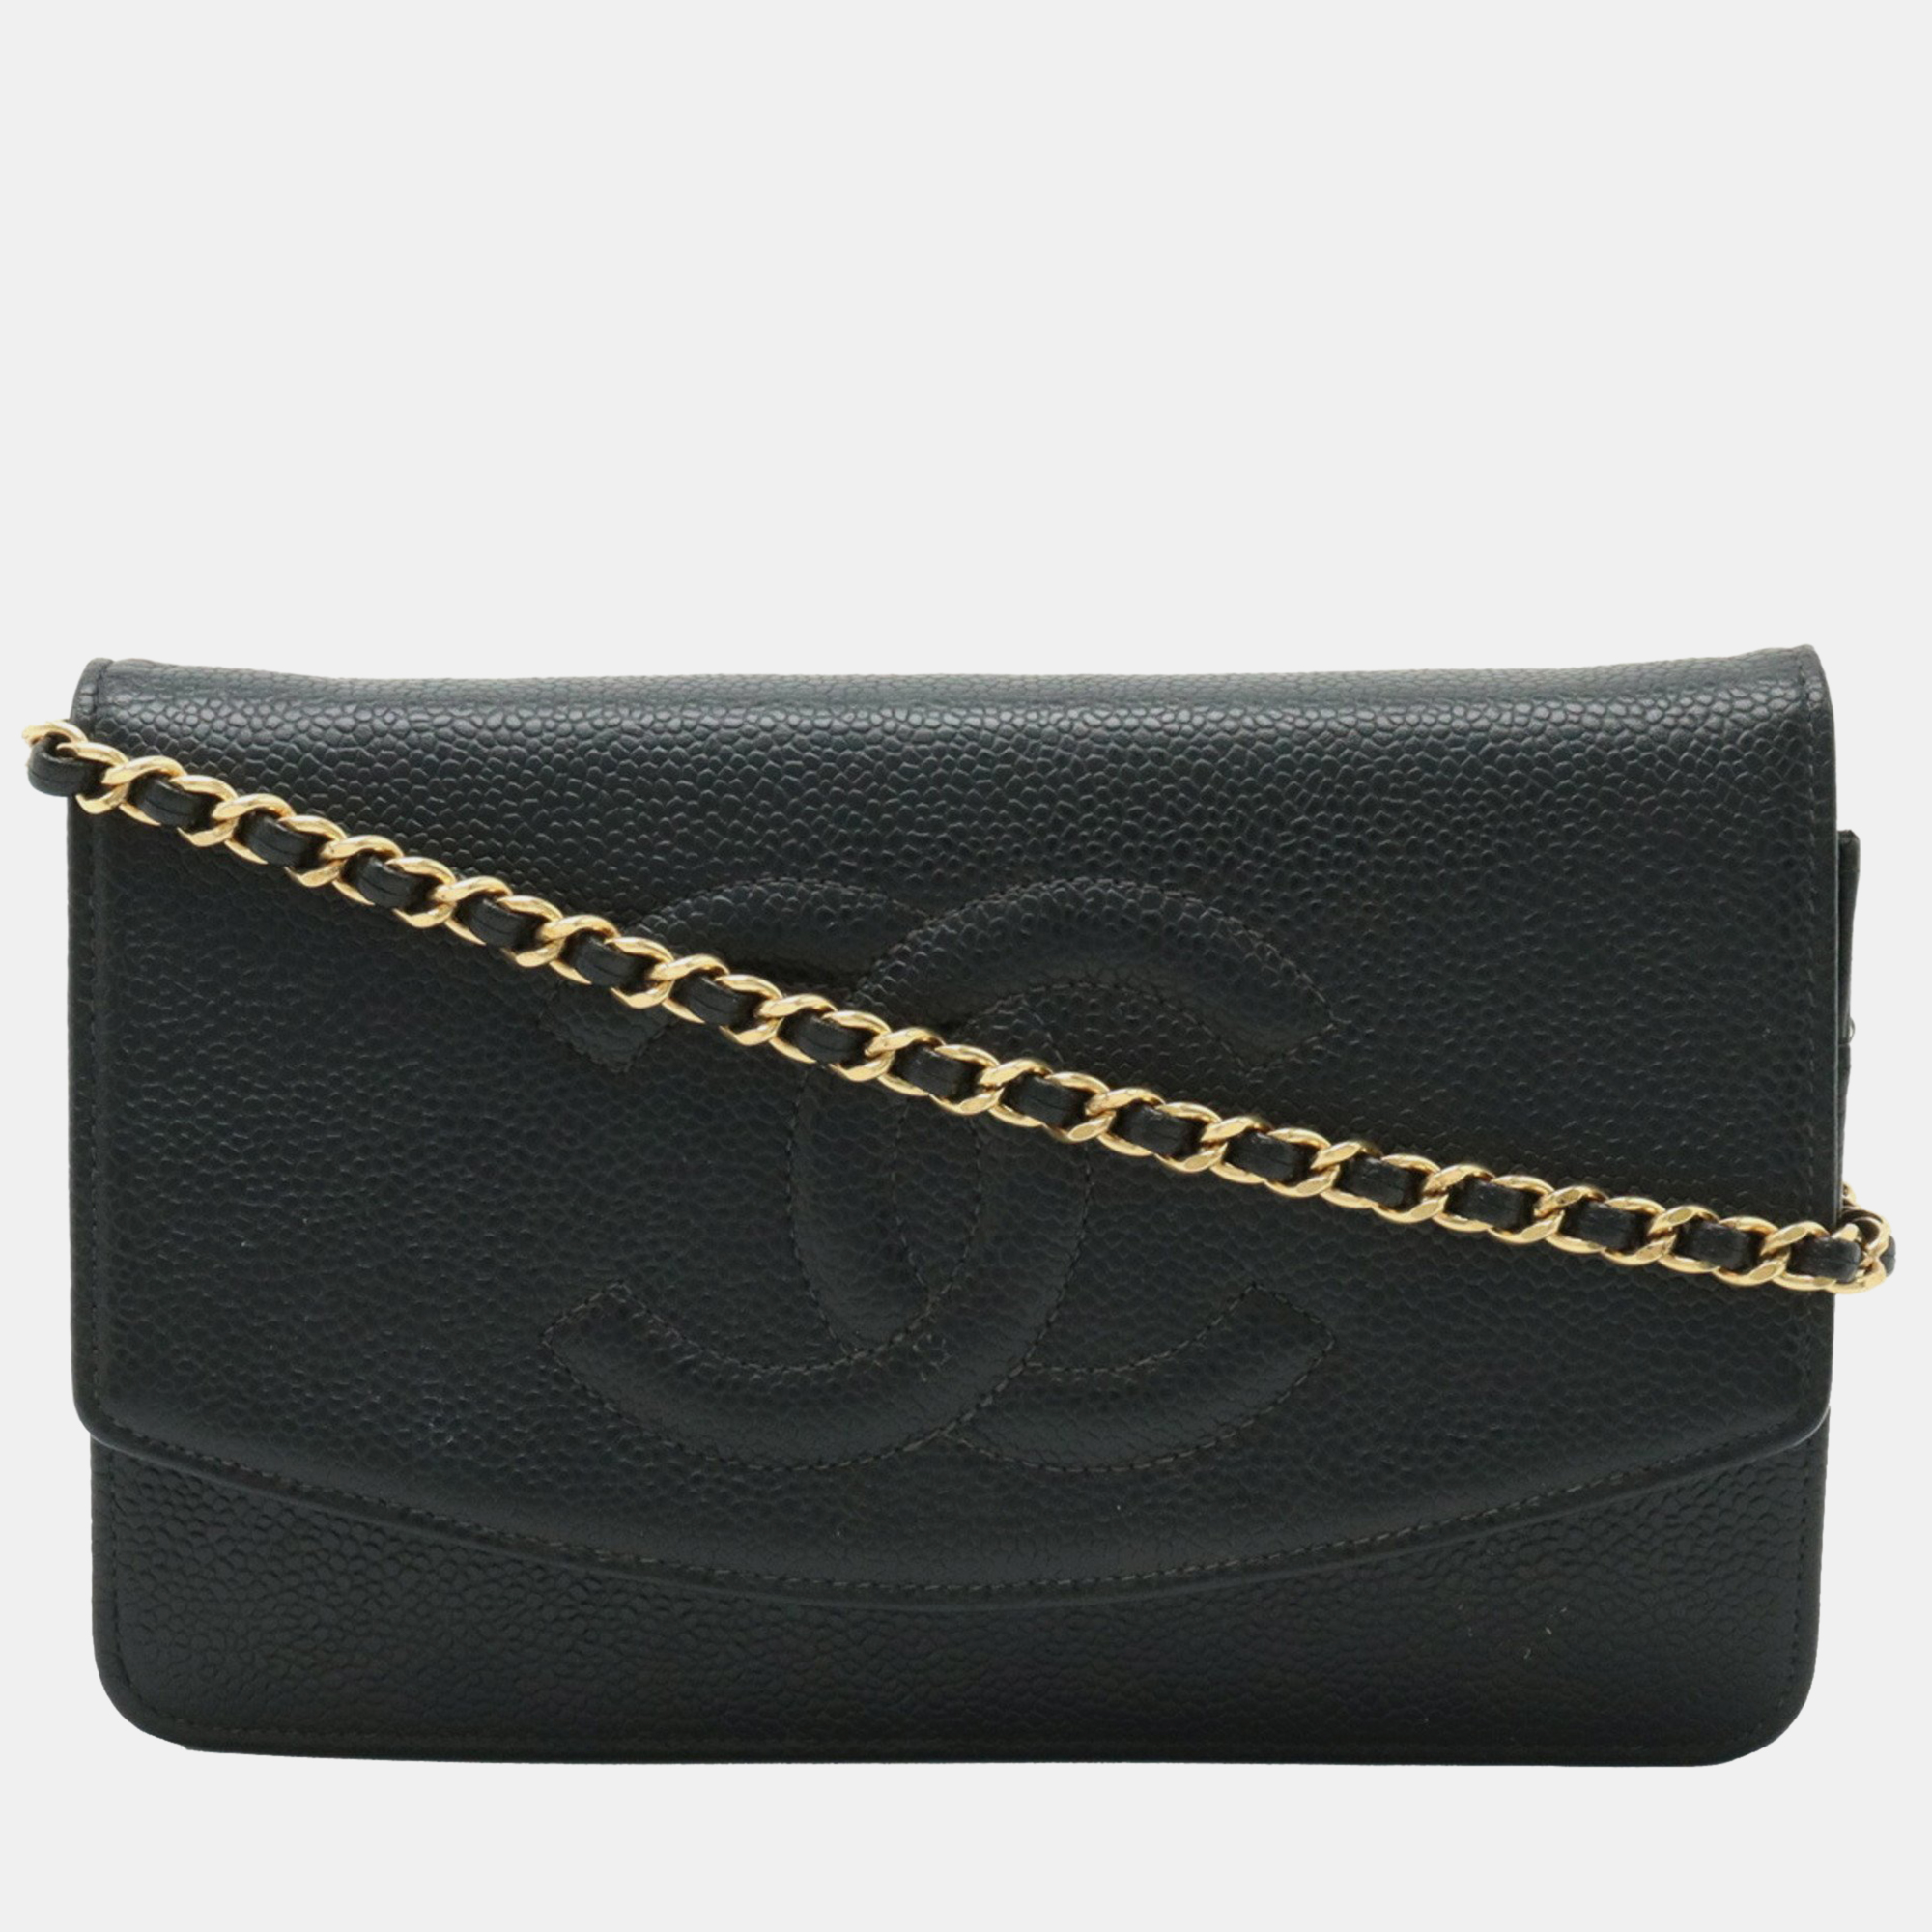 Chanel black leather caviar skin coco mark chain wallet